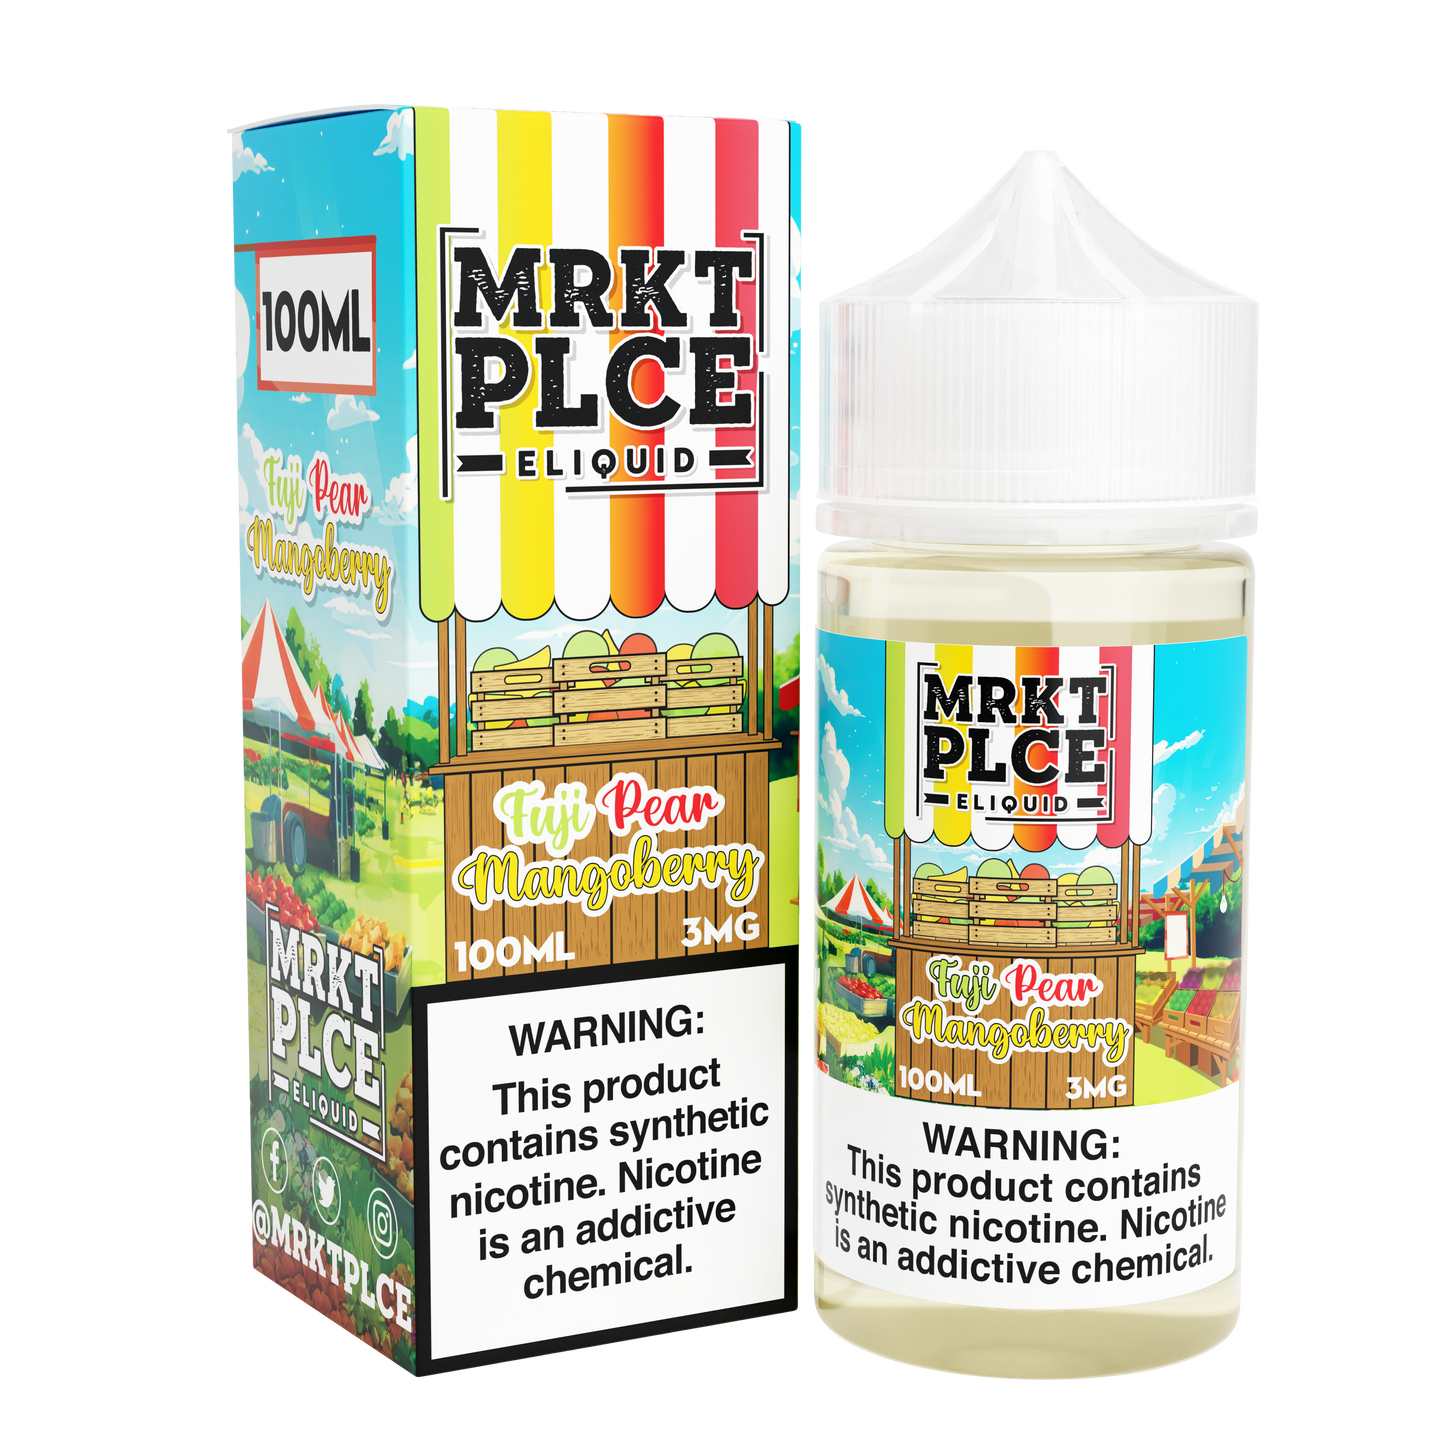 MRKT PLCE Series E-Liquid 100mL (Freebase) | Fuji Pear Mangoberry with packaging